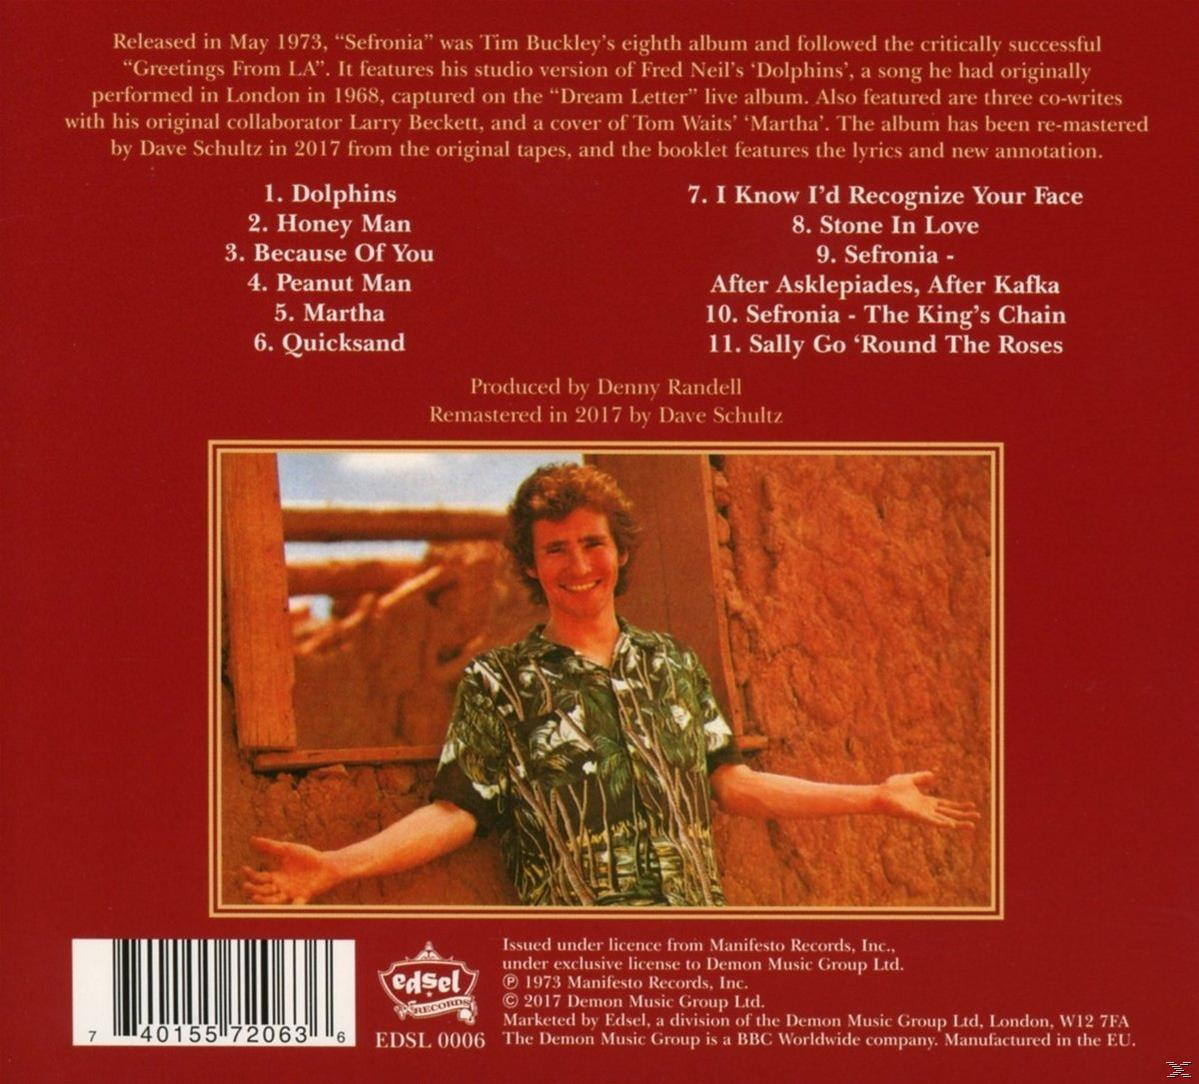 - Tim (CD) - (Remaster) Buckley Sefronia